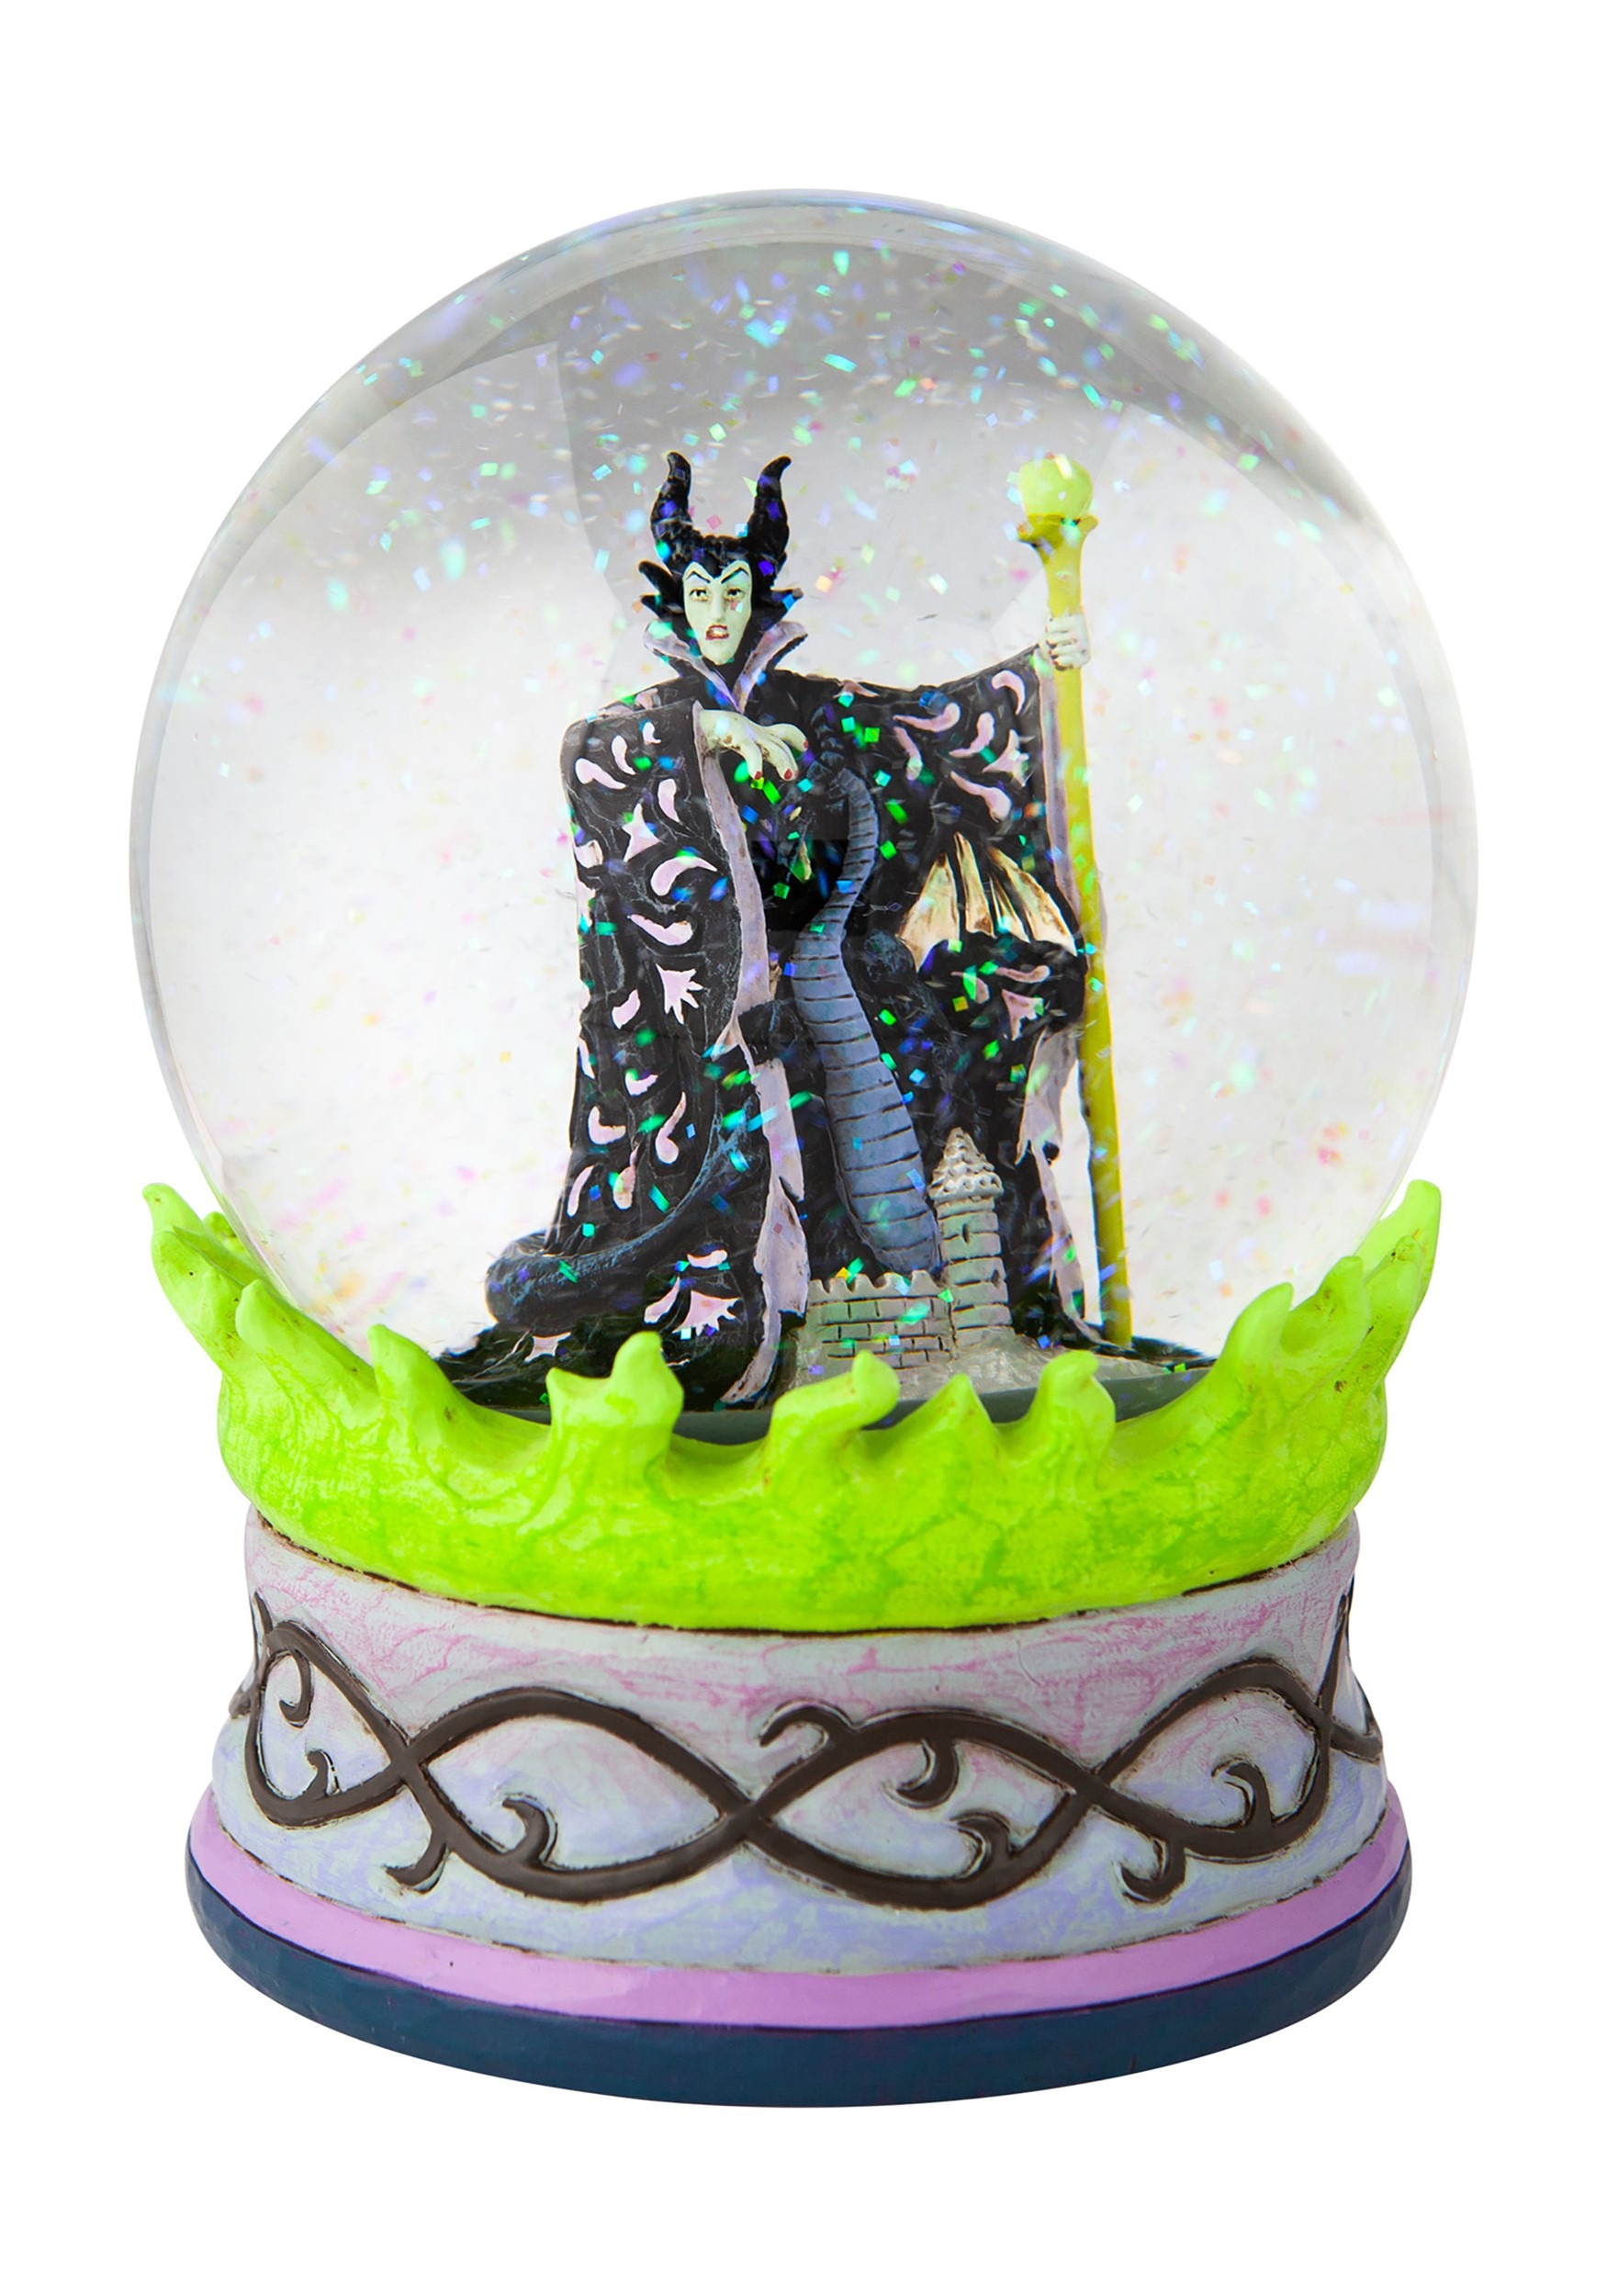 Decorative Maleficent Waterball